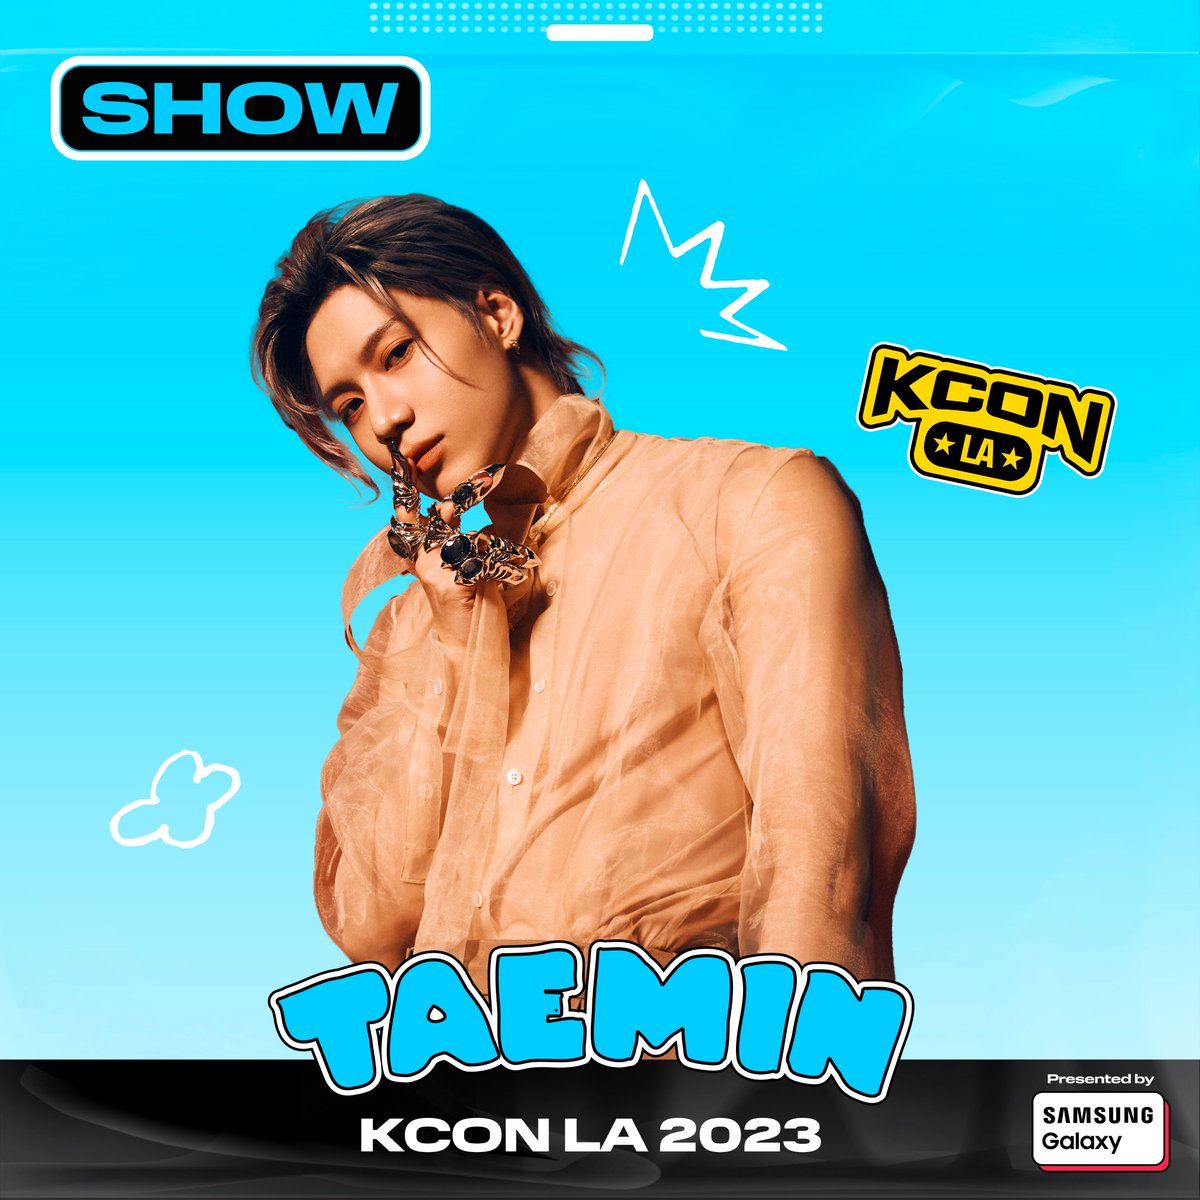 [ #KCONLA2023 ] ARTIST LINEUP

#TAEMIN 

🎈
KCON LA 2023
8.18.~8.20.
Let’s #KCON!